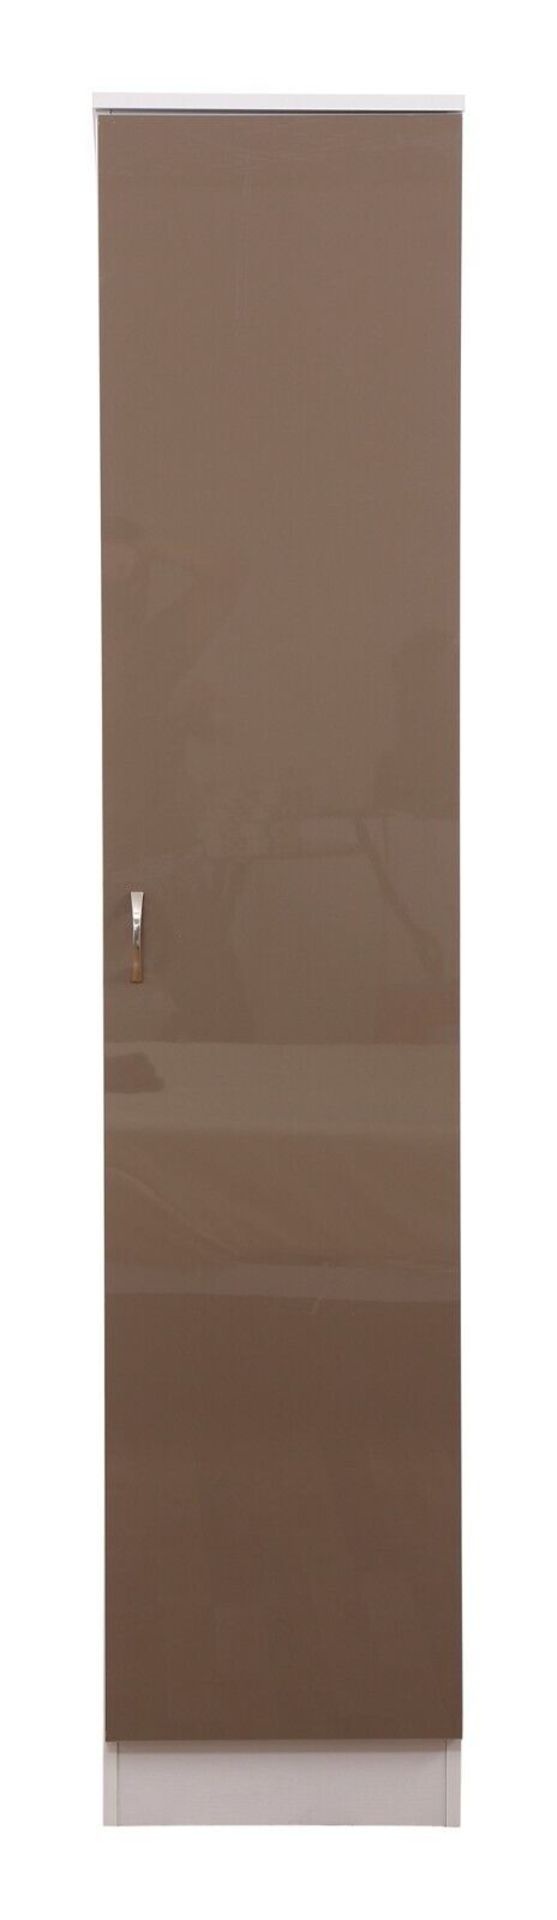 SINGLE DOOR WARDROBE WITH HIGH GLOSS MOCHA DOOR/MATT WHITE FRAME - Image 2 of 5